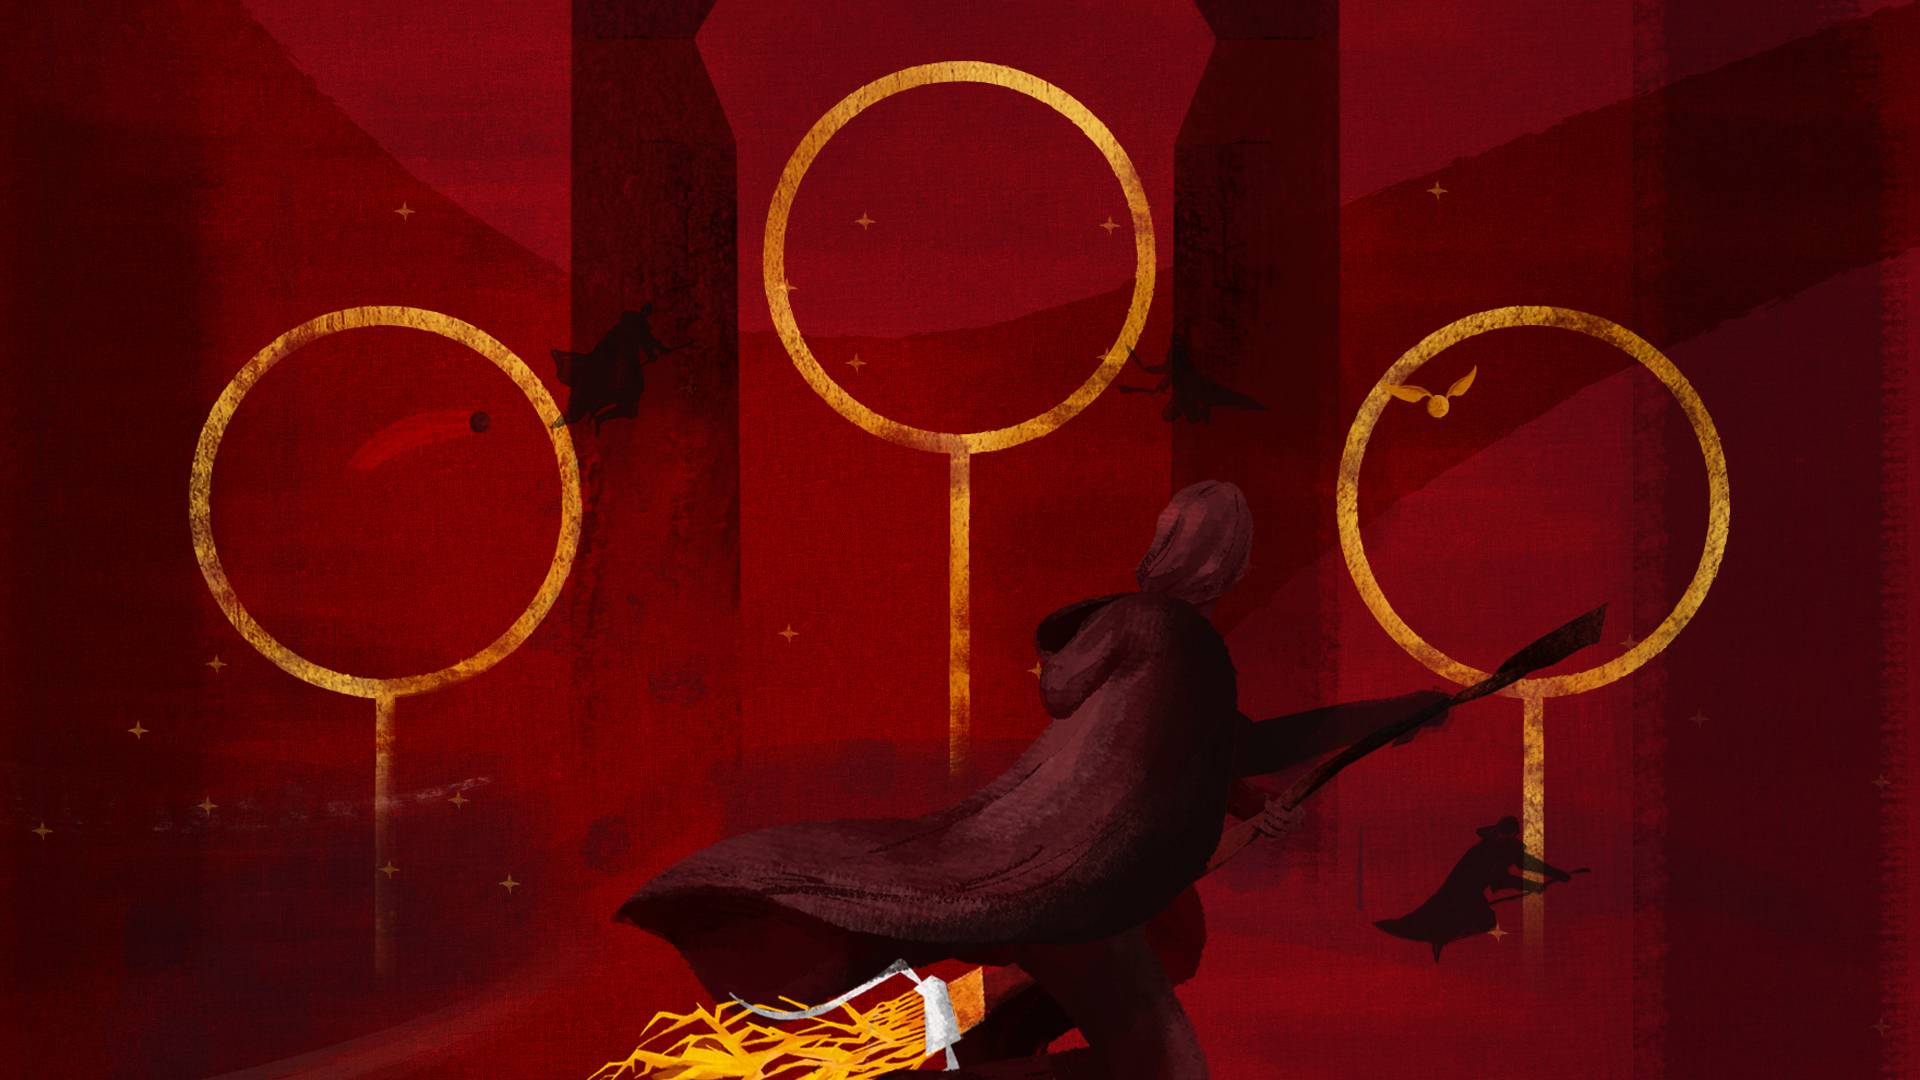 pmp-illustration-quidditch-hoops